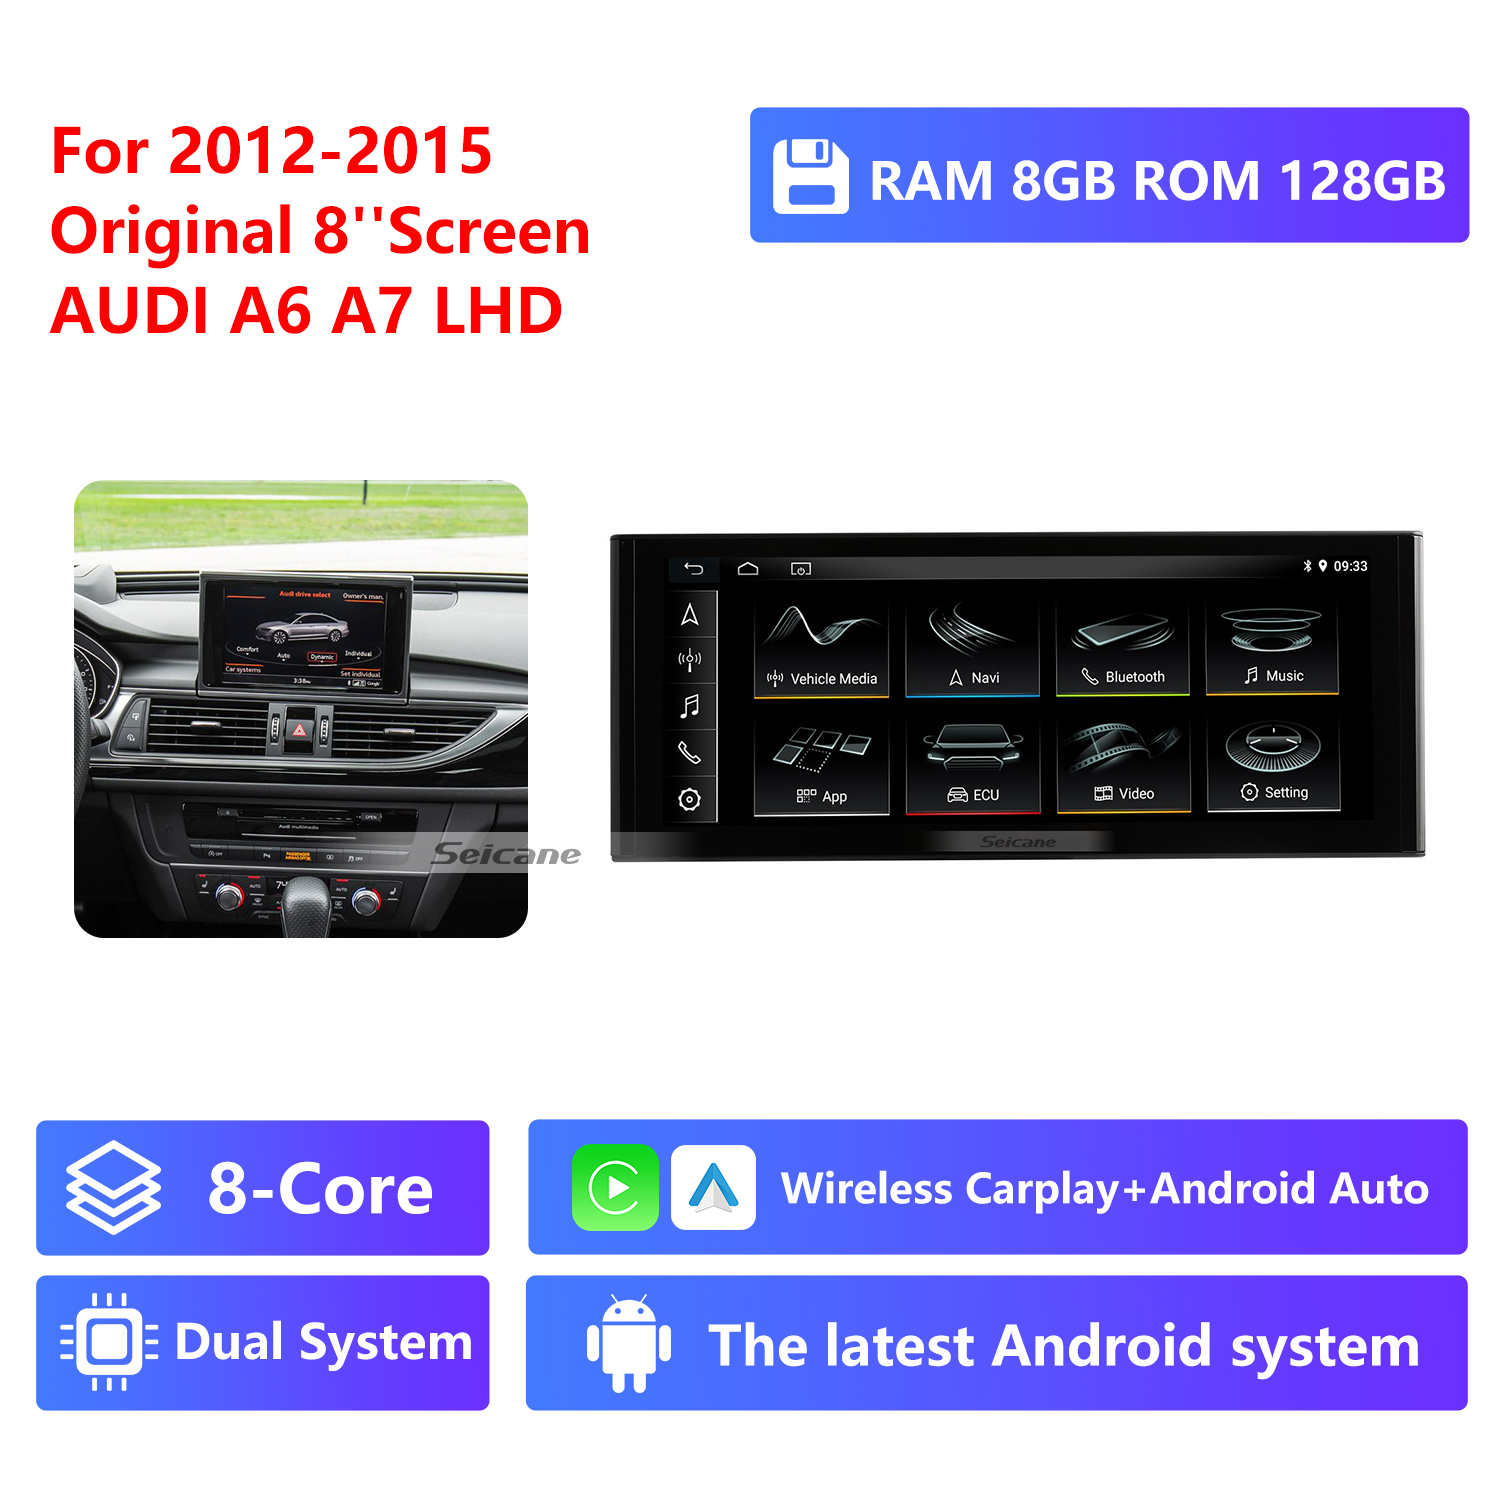 8-Core RAM 8G ROM 128G,2012-2015, Original 8"Screen,LHD